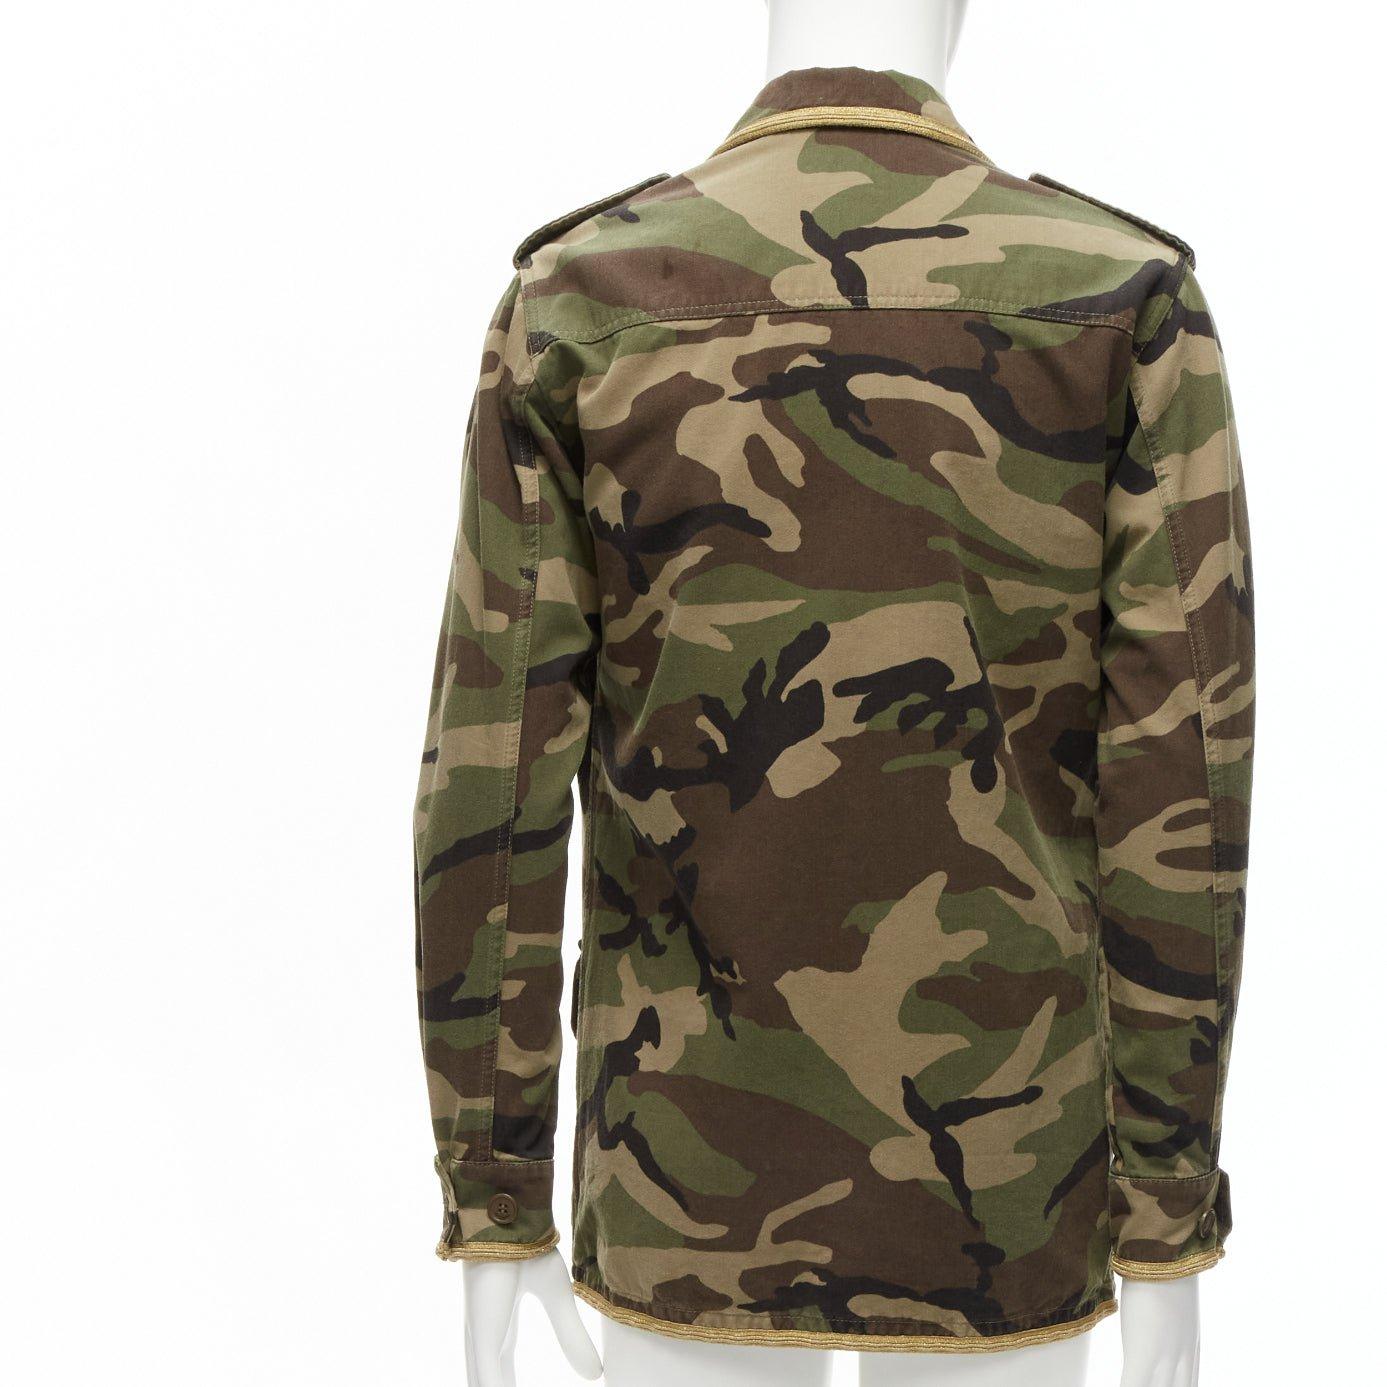 SAINT LAURENT Hedi Slimane 2014 trim camouflage military cargo jacket FR46 S For Sale 1